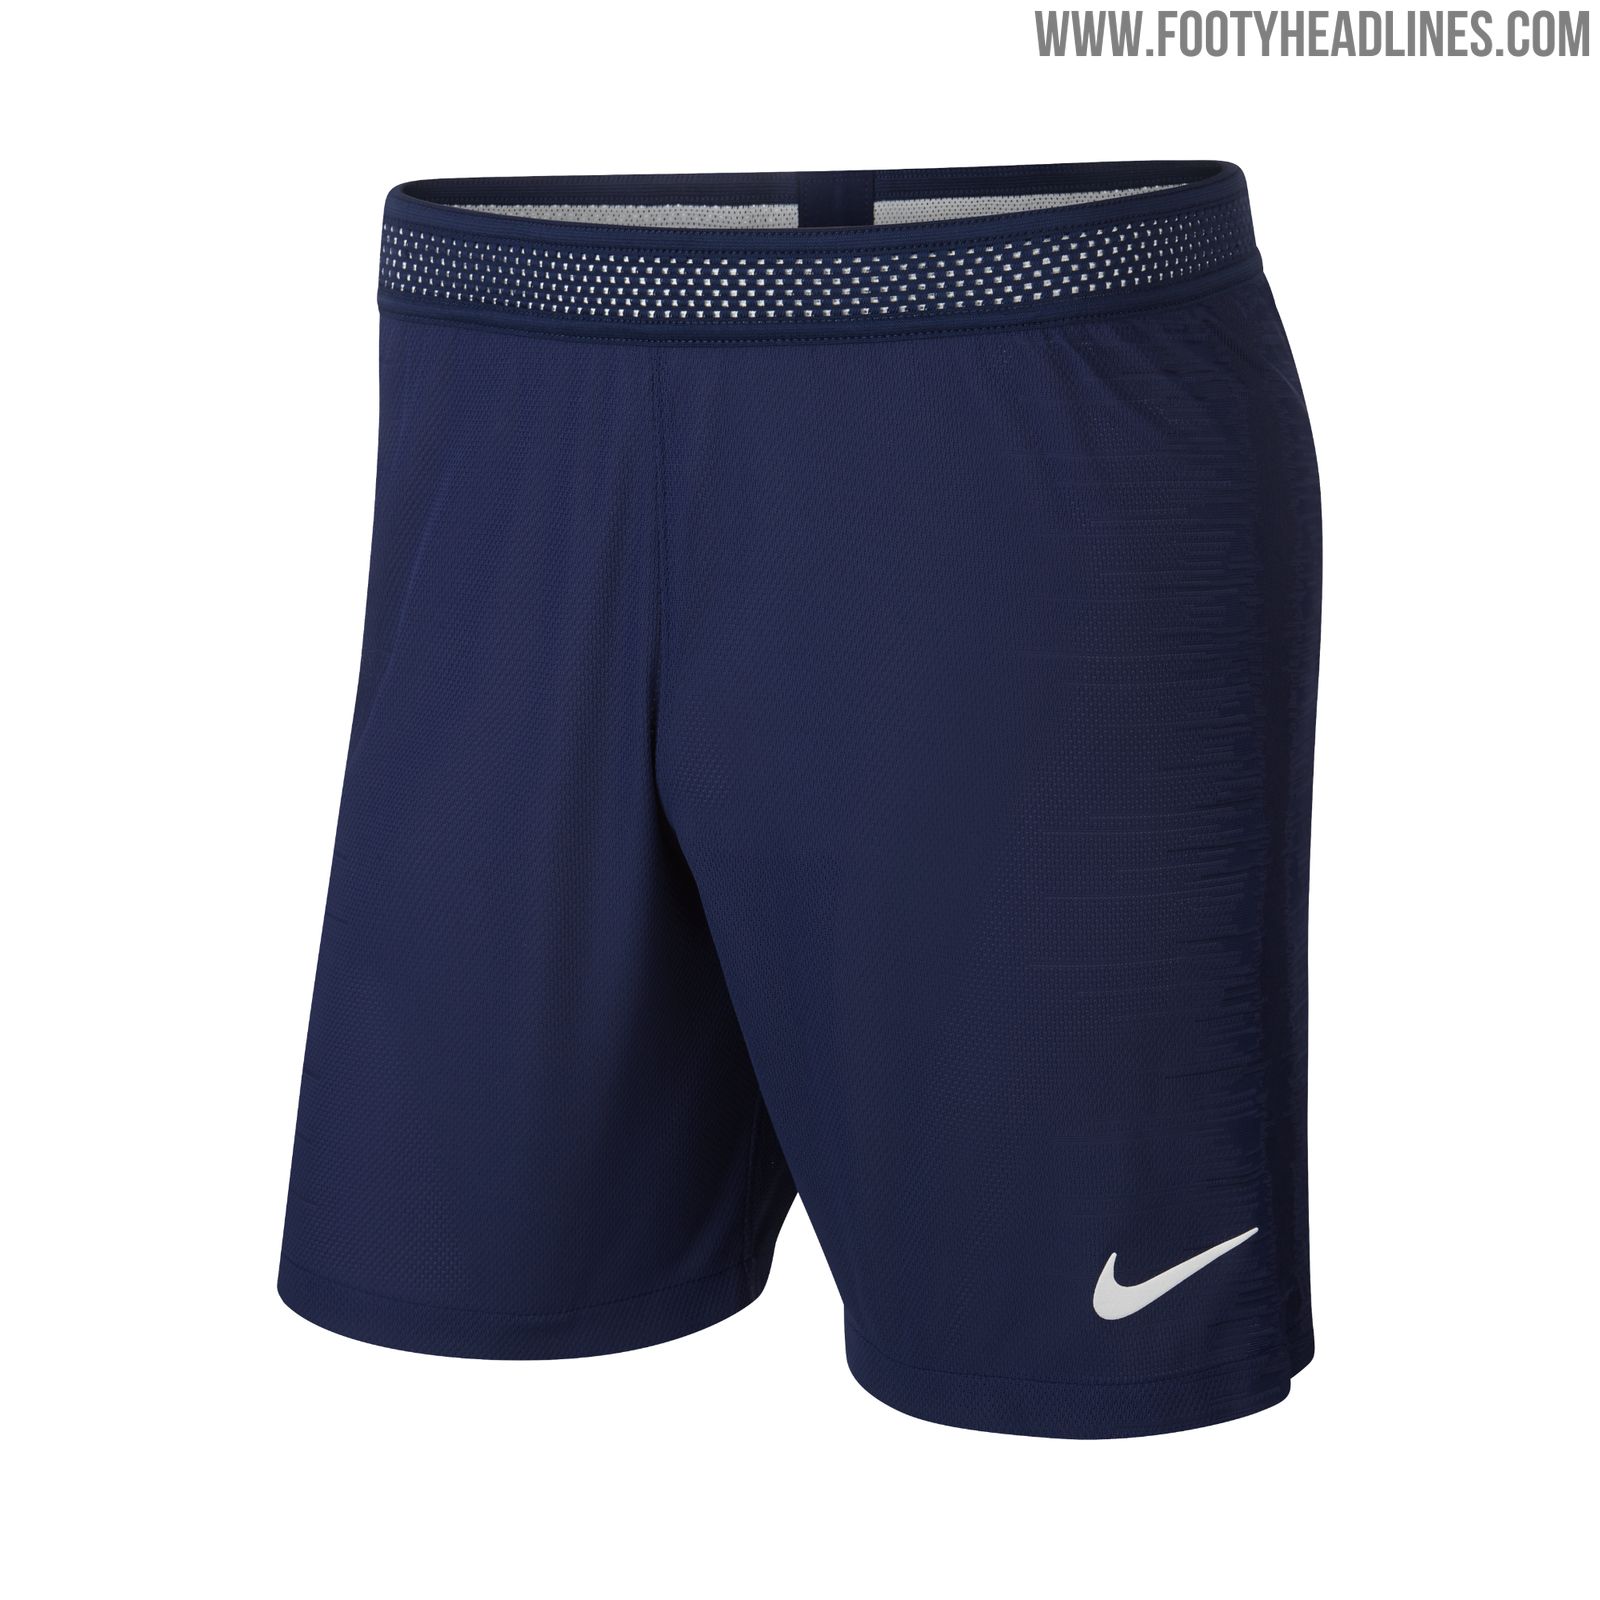 Nike Tottenham Hotspur 18-19 Home Kit Released - Footy Headlines